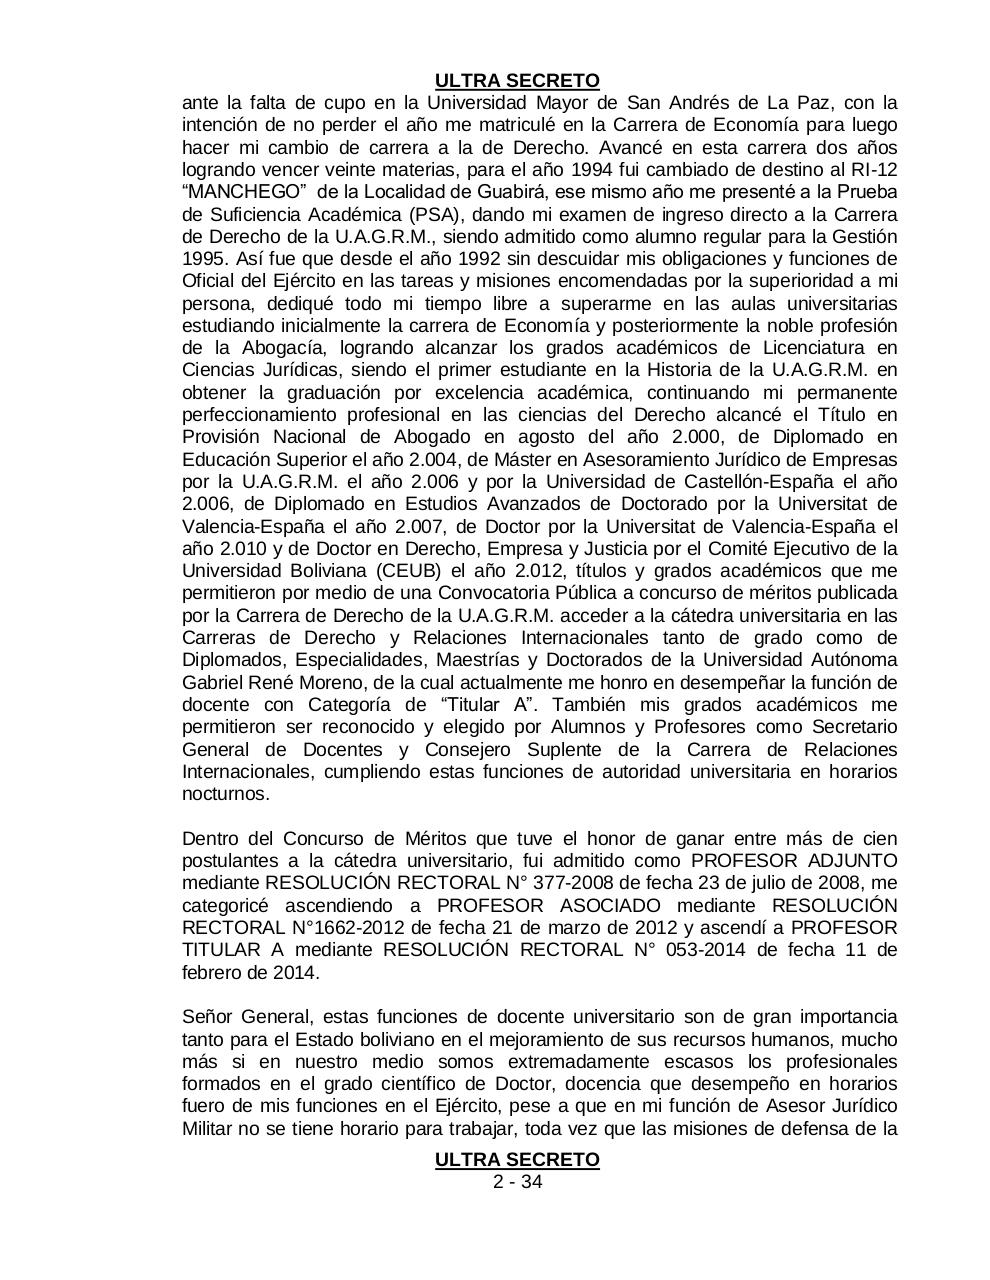 Informe-Ultra-Secreto-coronel-Cardona_ECDFIL20150521_0002.pdf - page 2/34